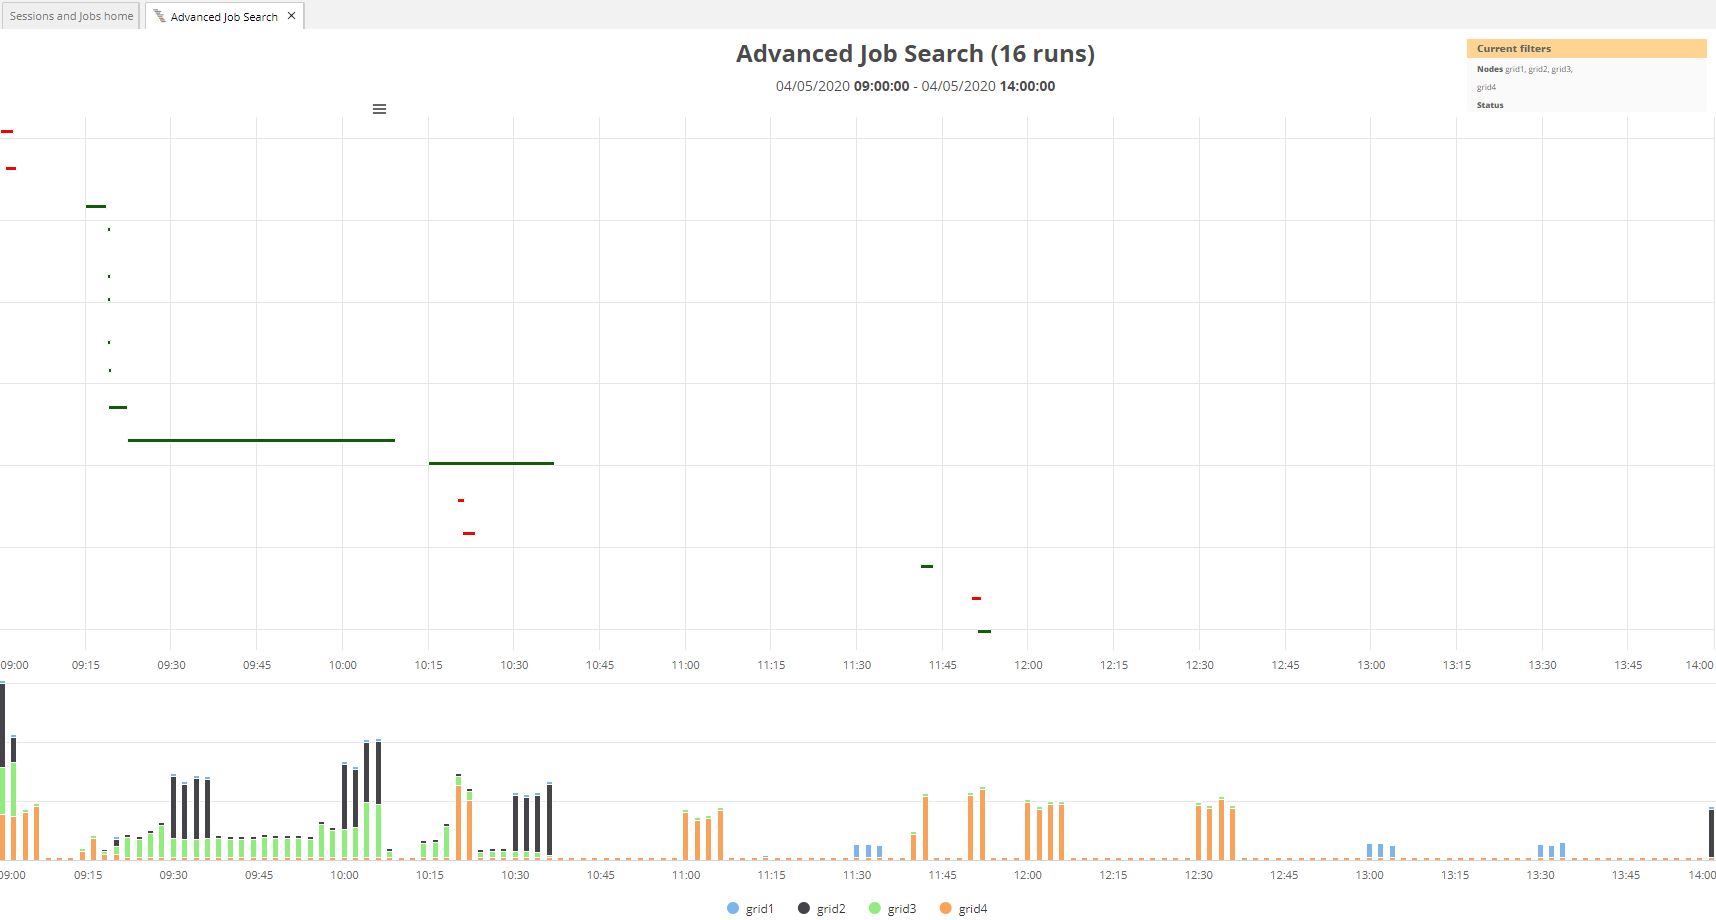 Jobs Advanced Search